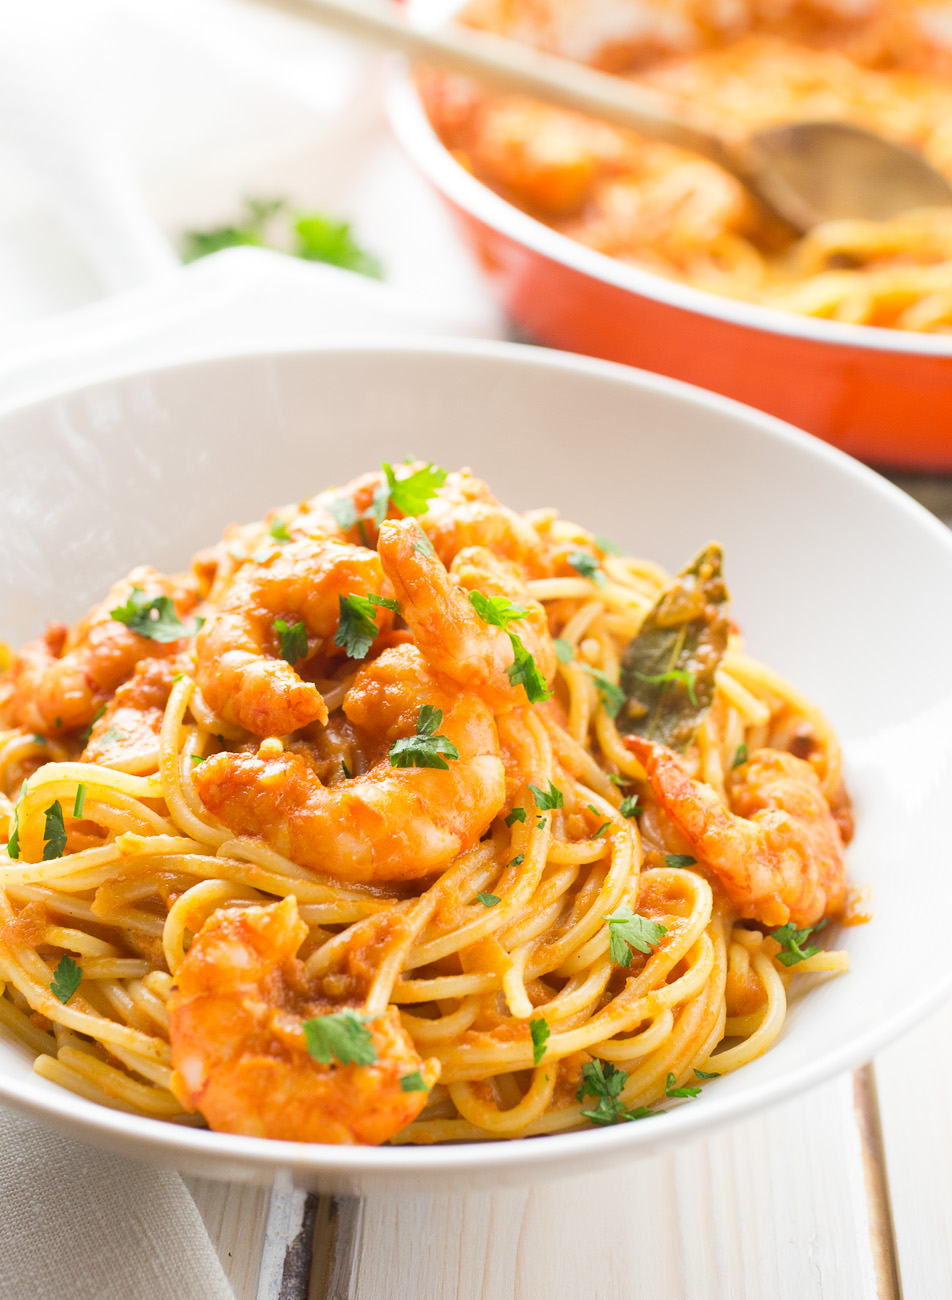 Spicy tomato and shrimp pasta { thegirllovestoeat.com }